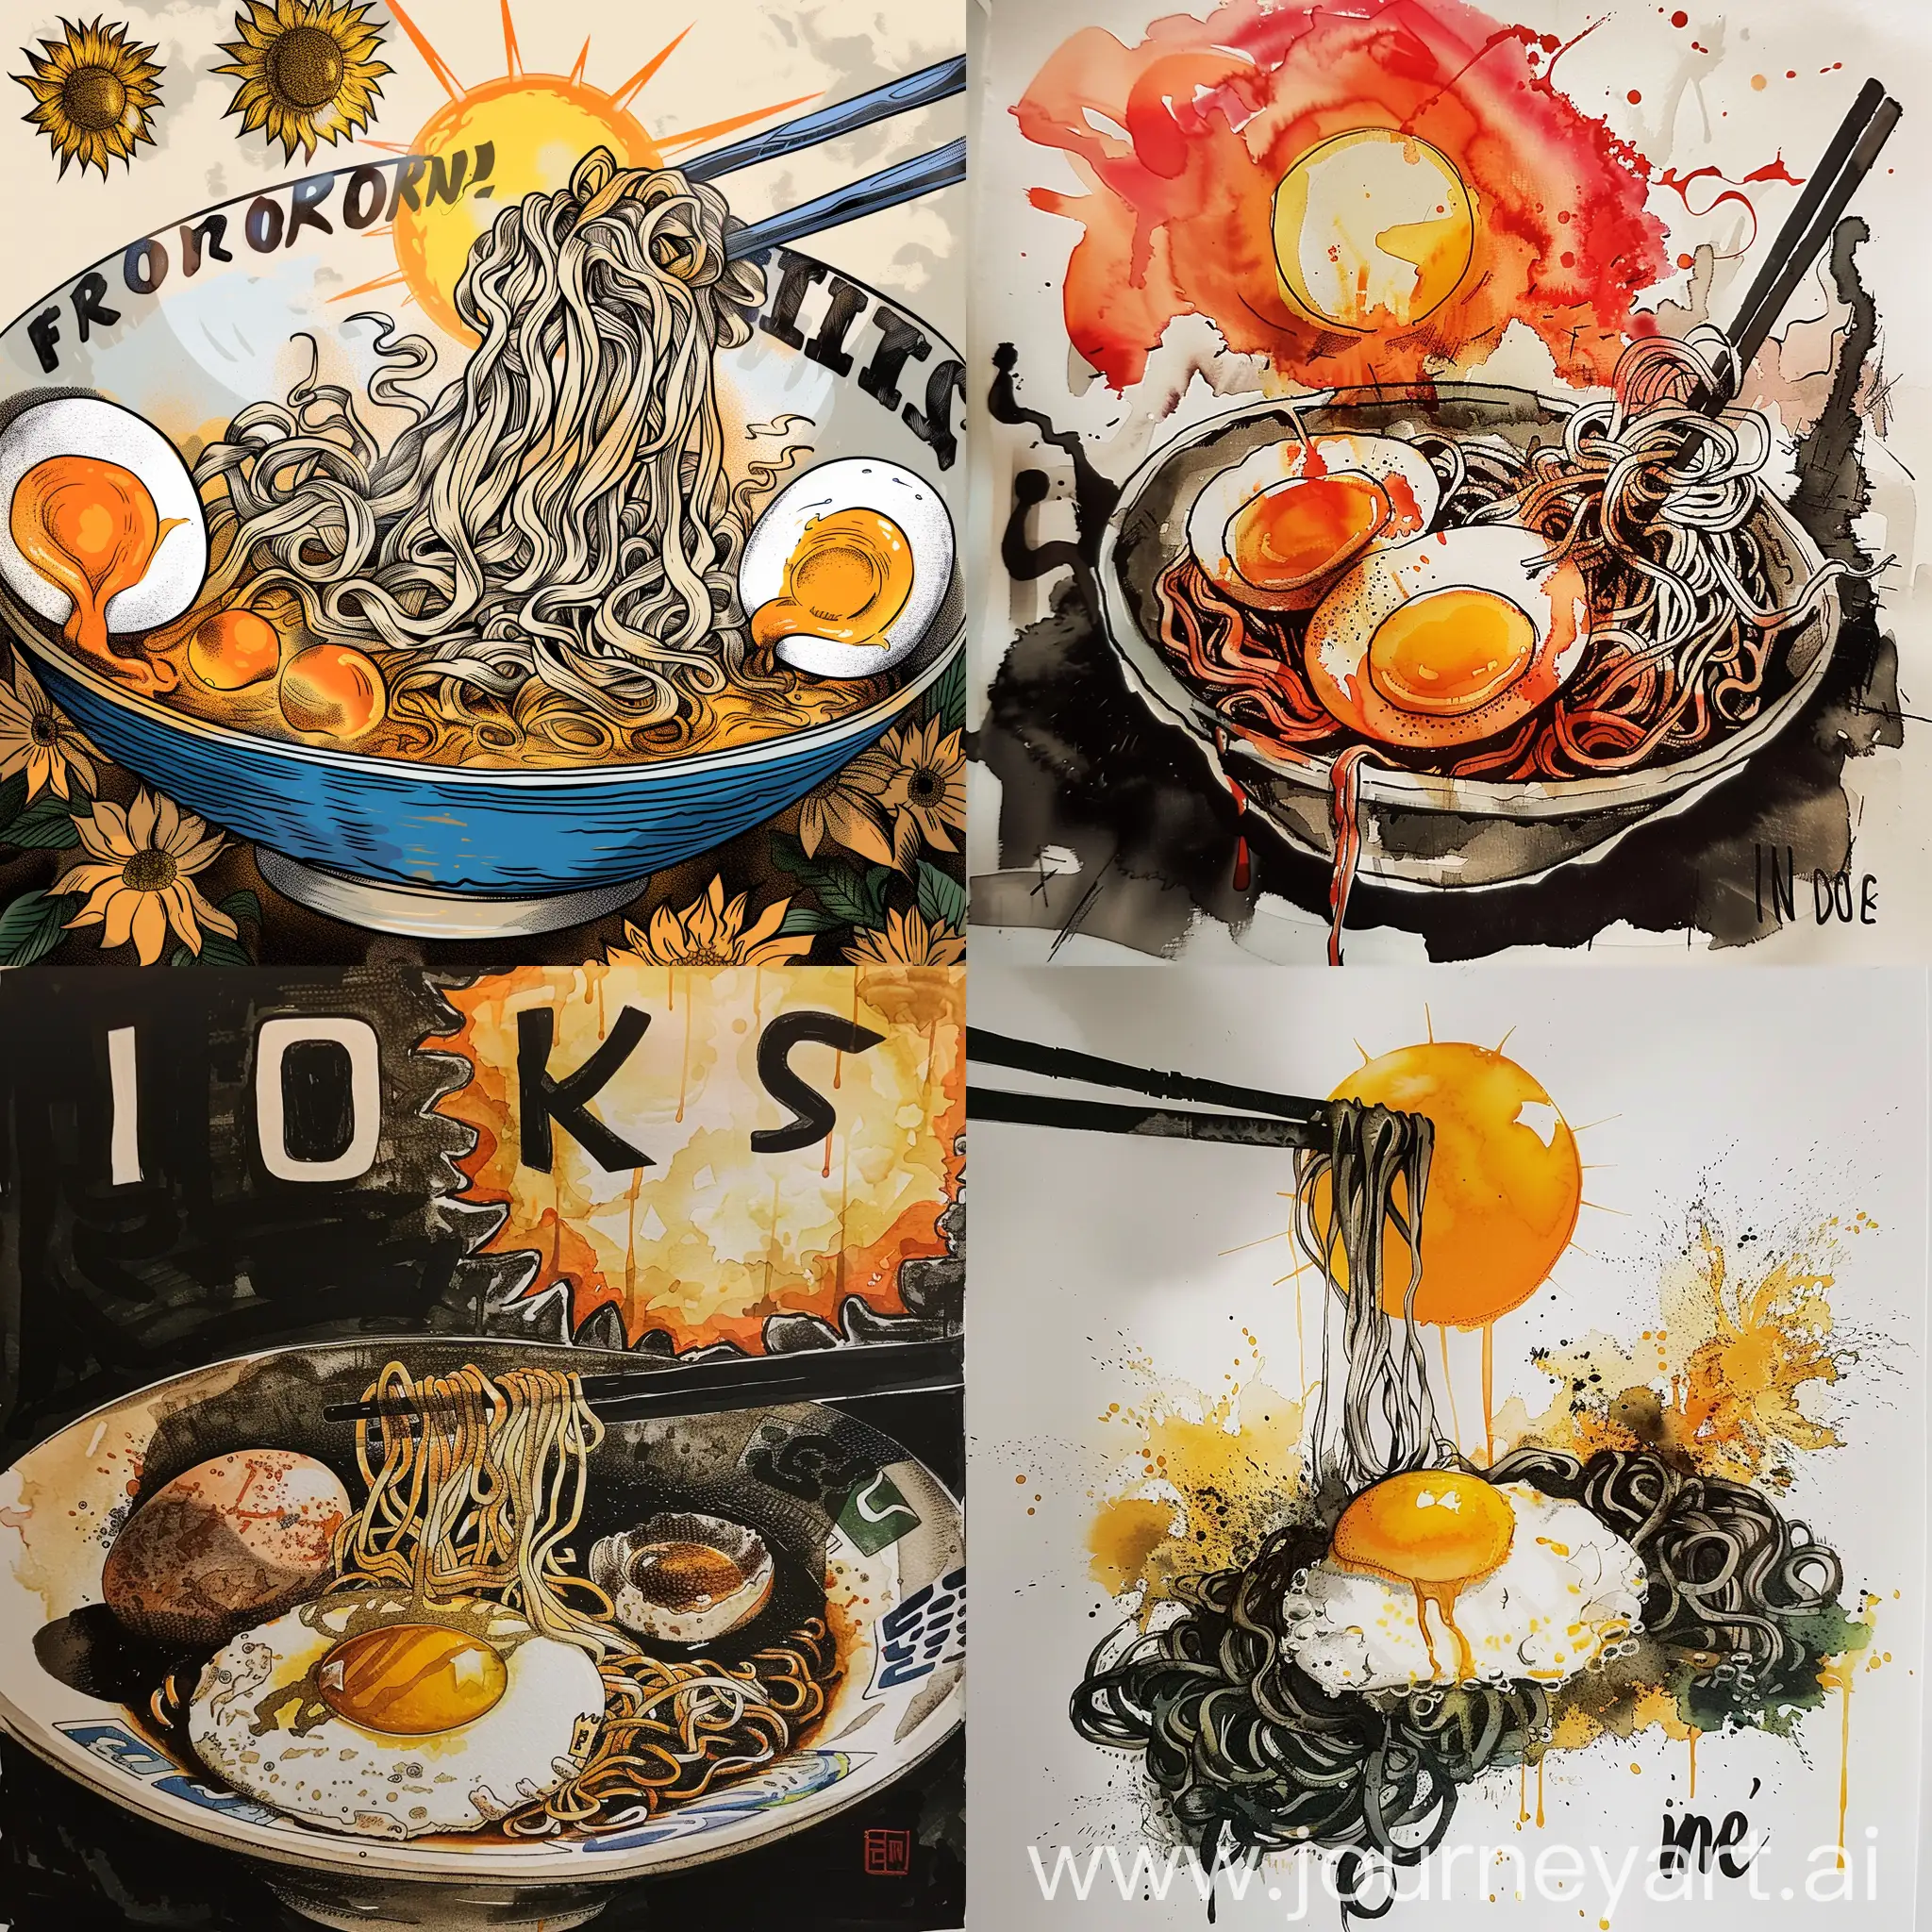 Ink suns eats noodles with egg